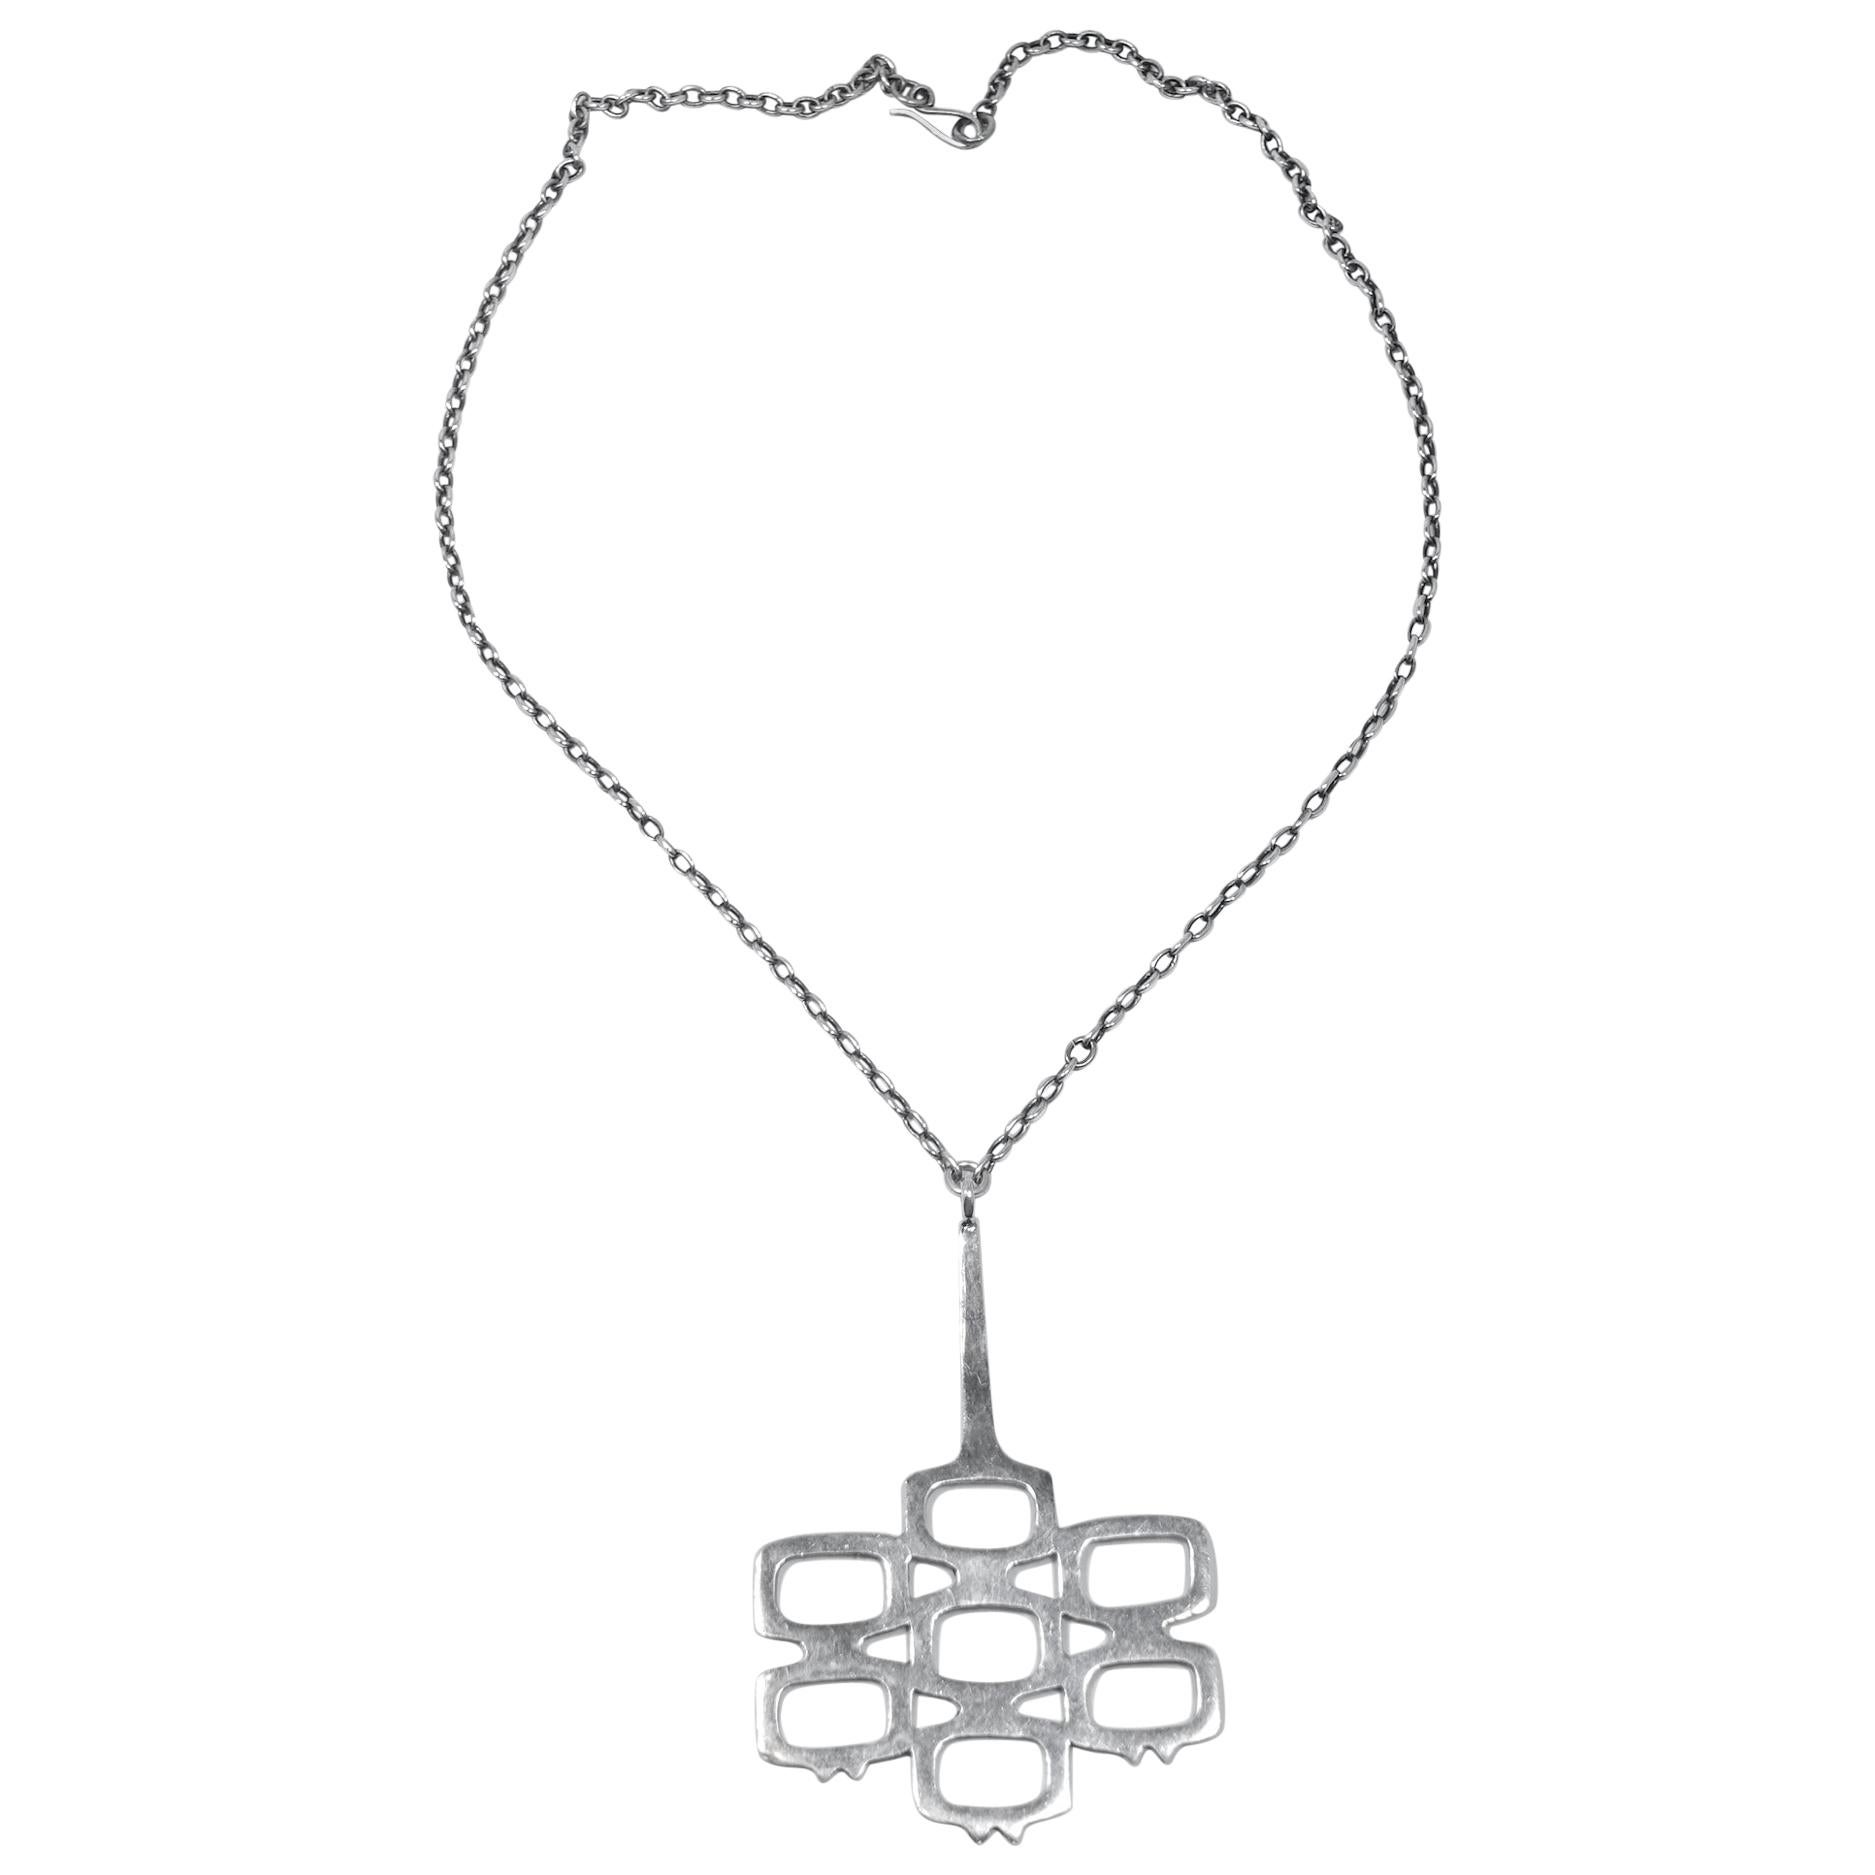 Vintage 60’s Mod Sterling Silver Pendant Necklace